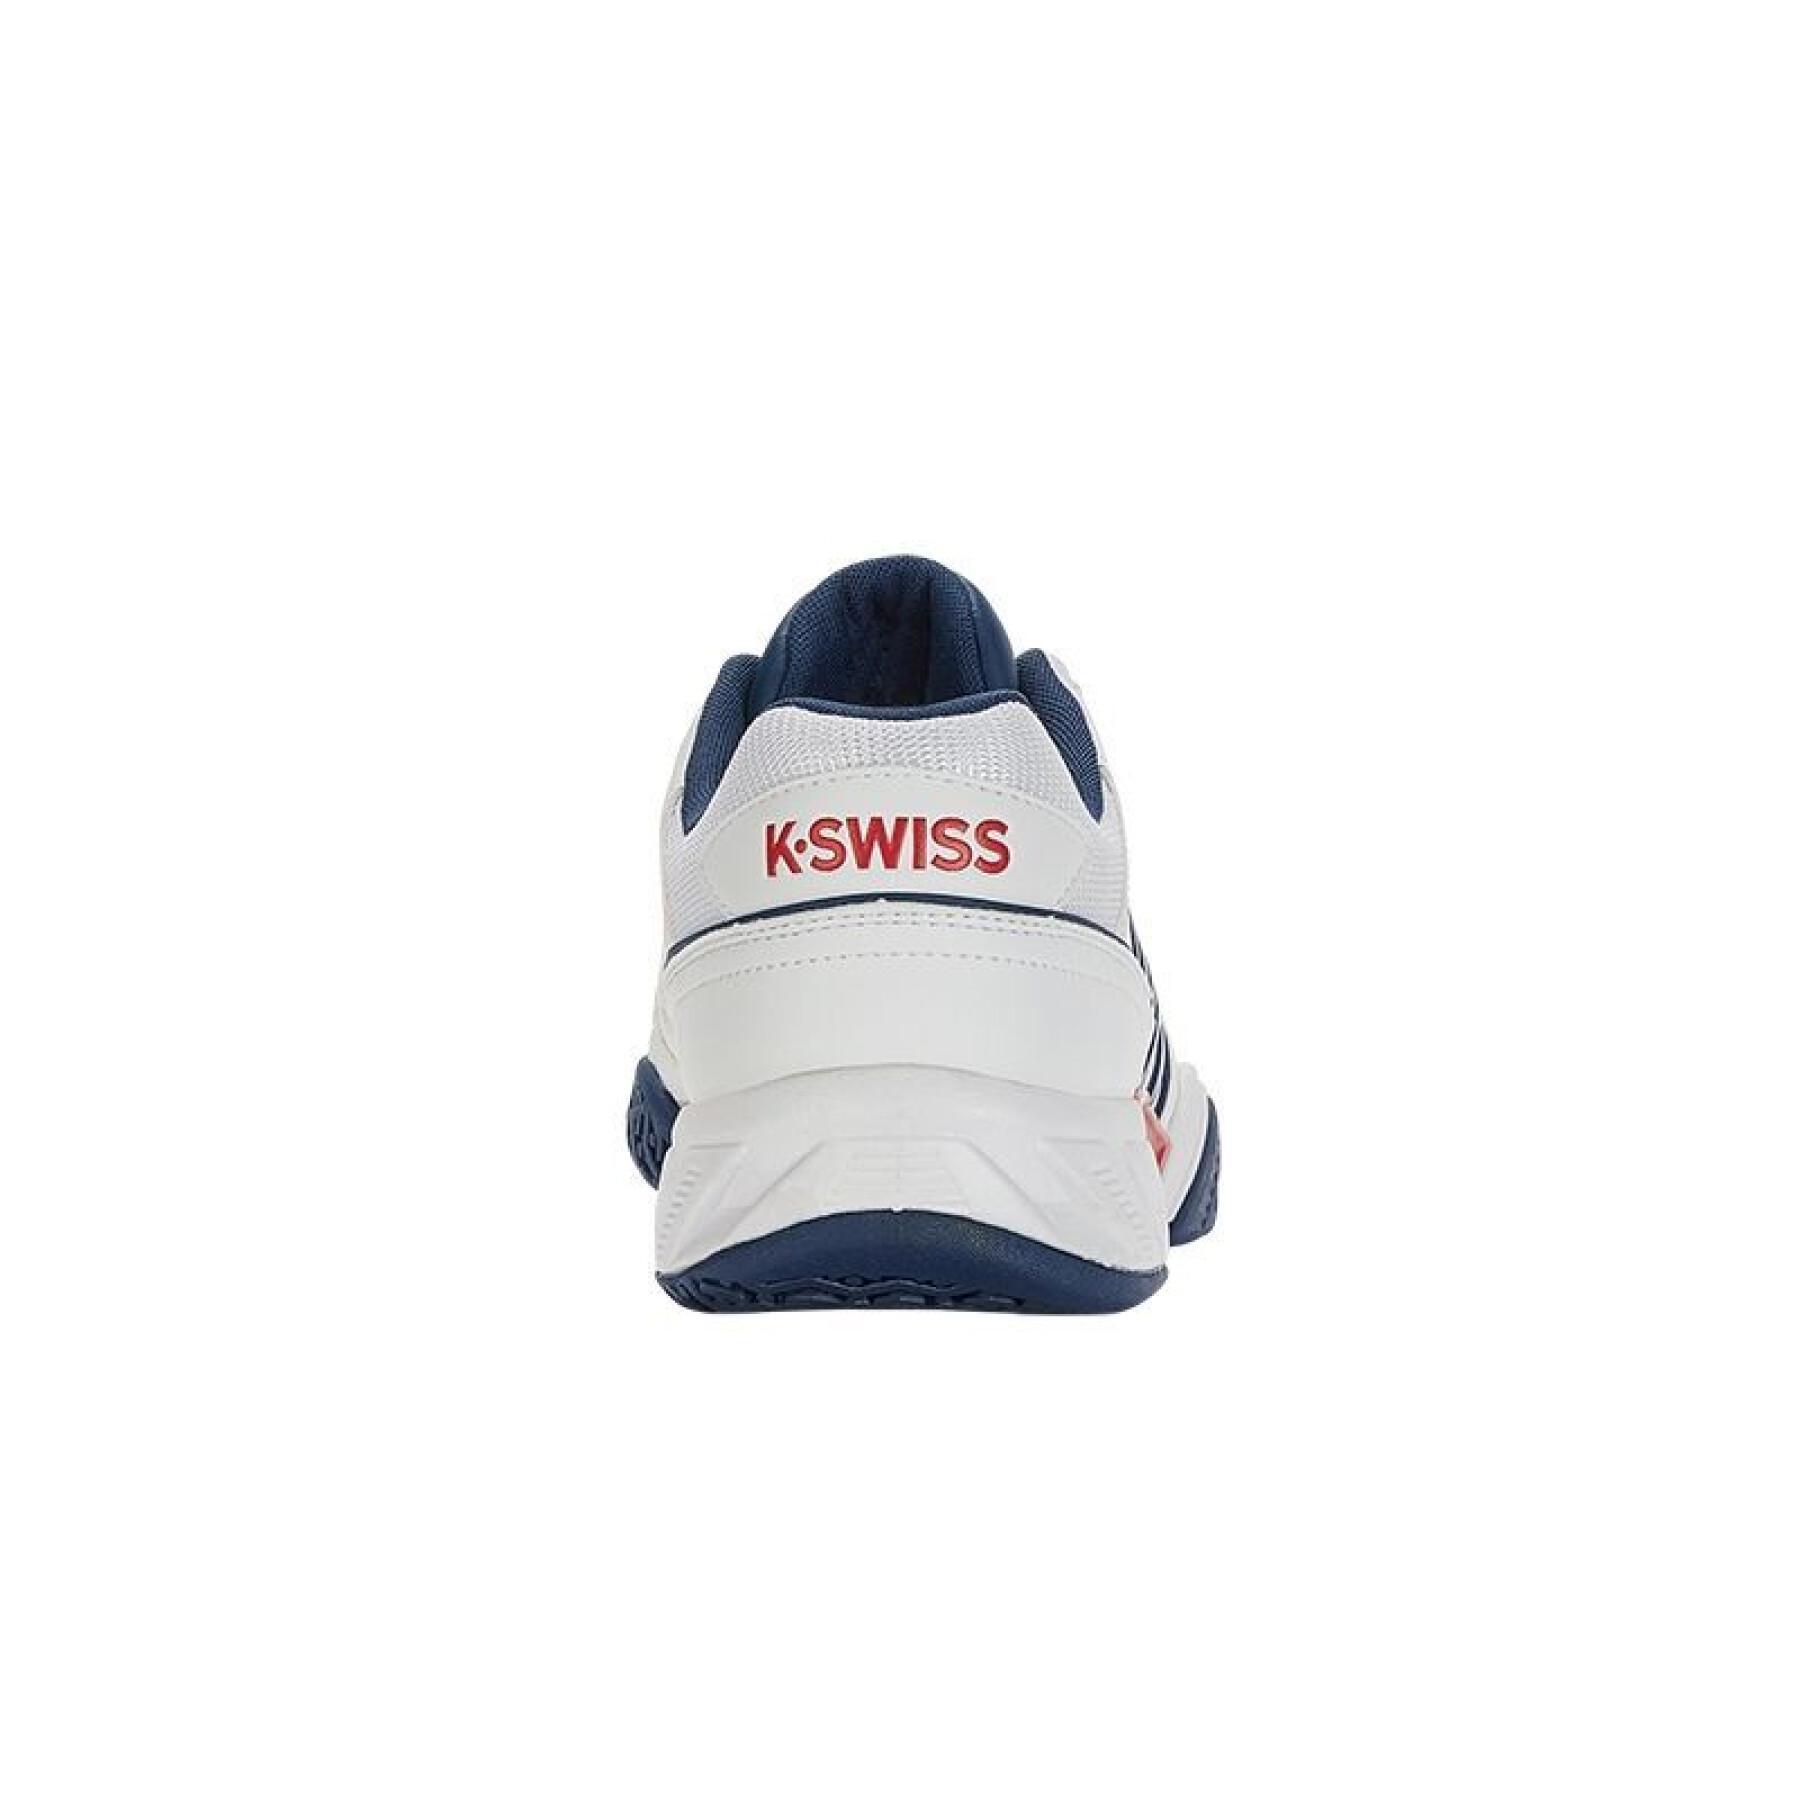 Tennis shoes K-Swiss Bigshot Light 4 Omni